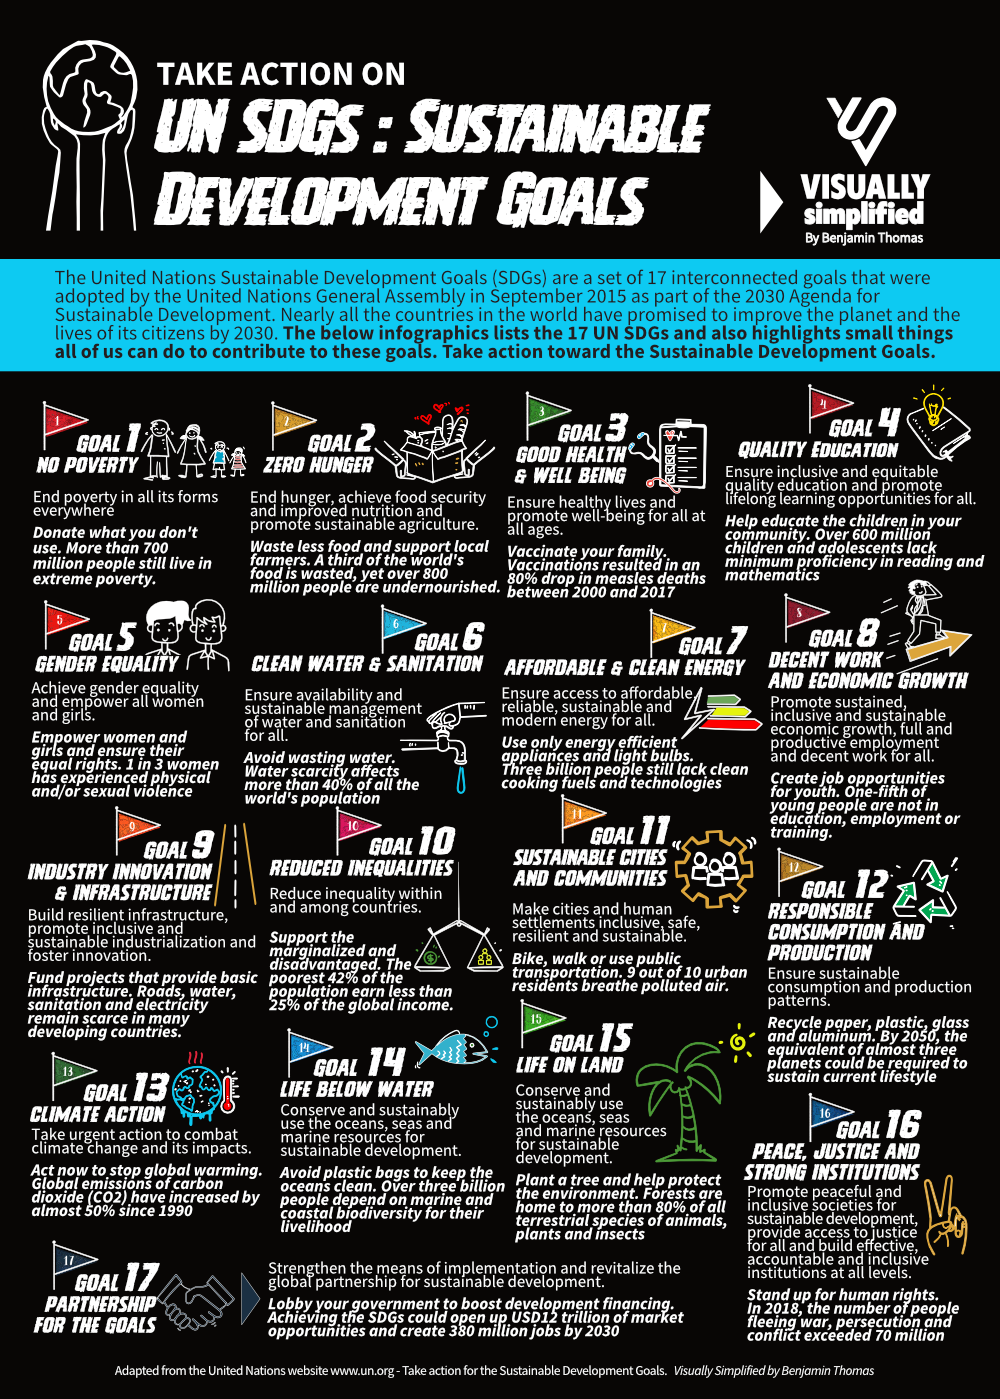 UN Sustainable Development Goals - SDGs - visually simplified by Benjamin Thomas